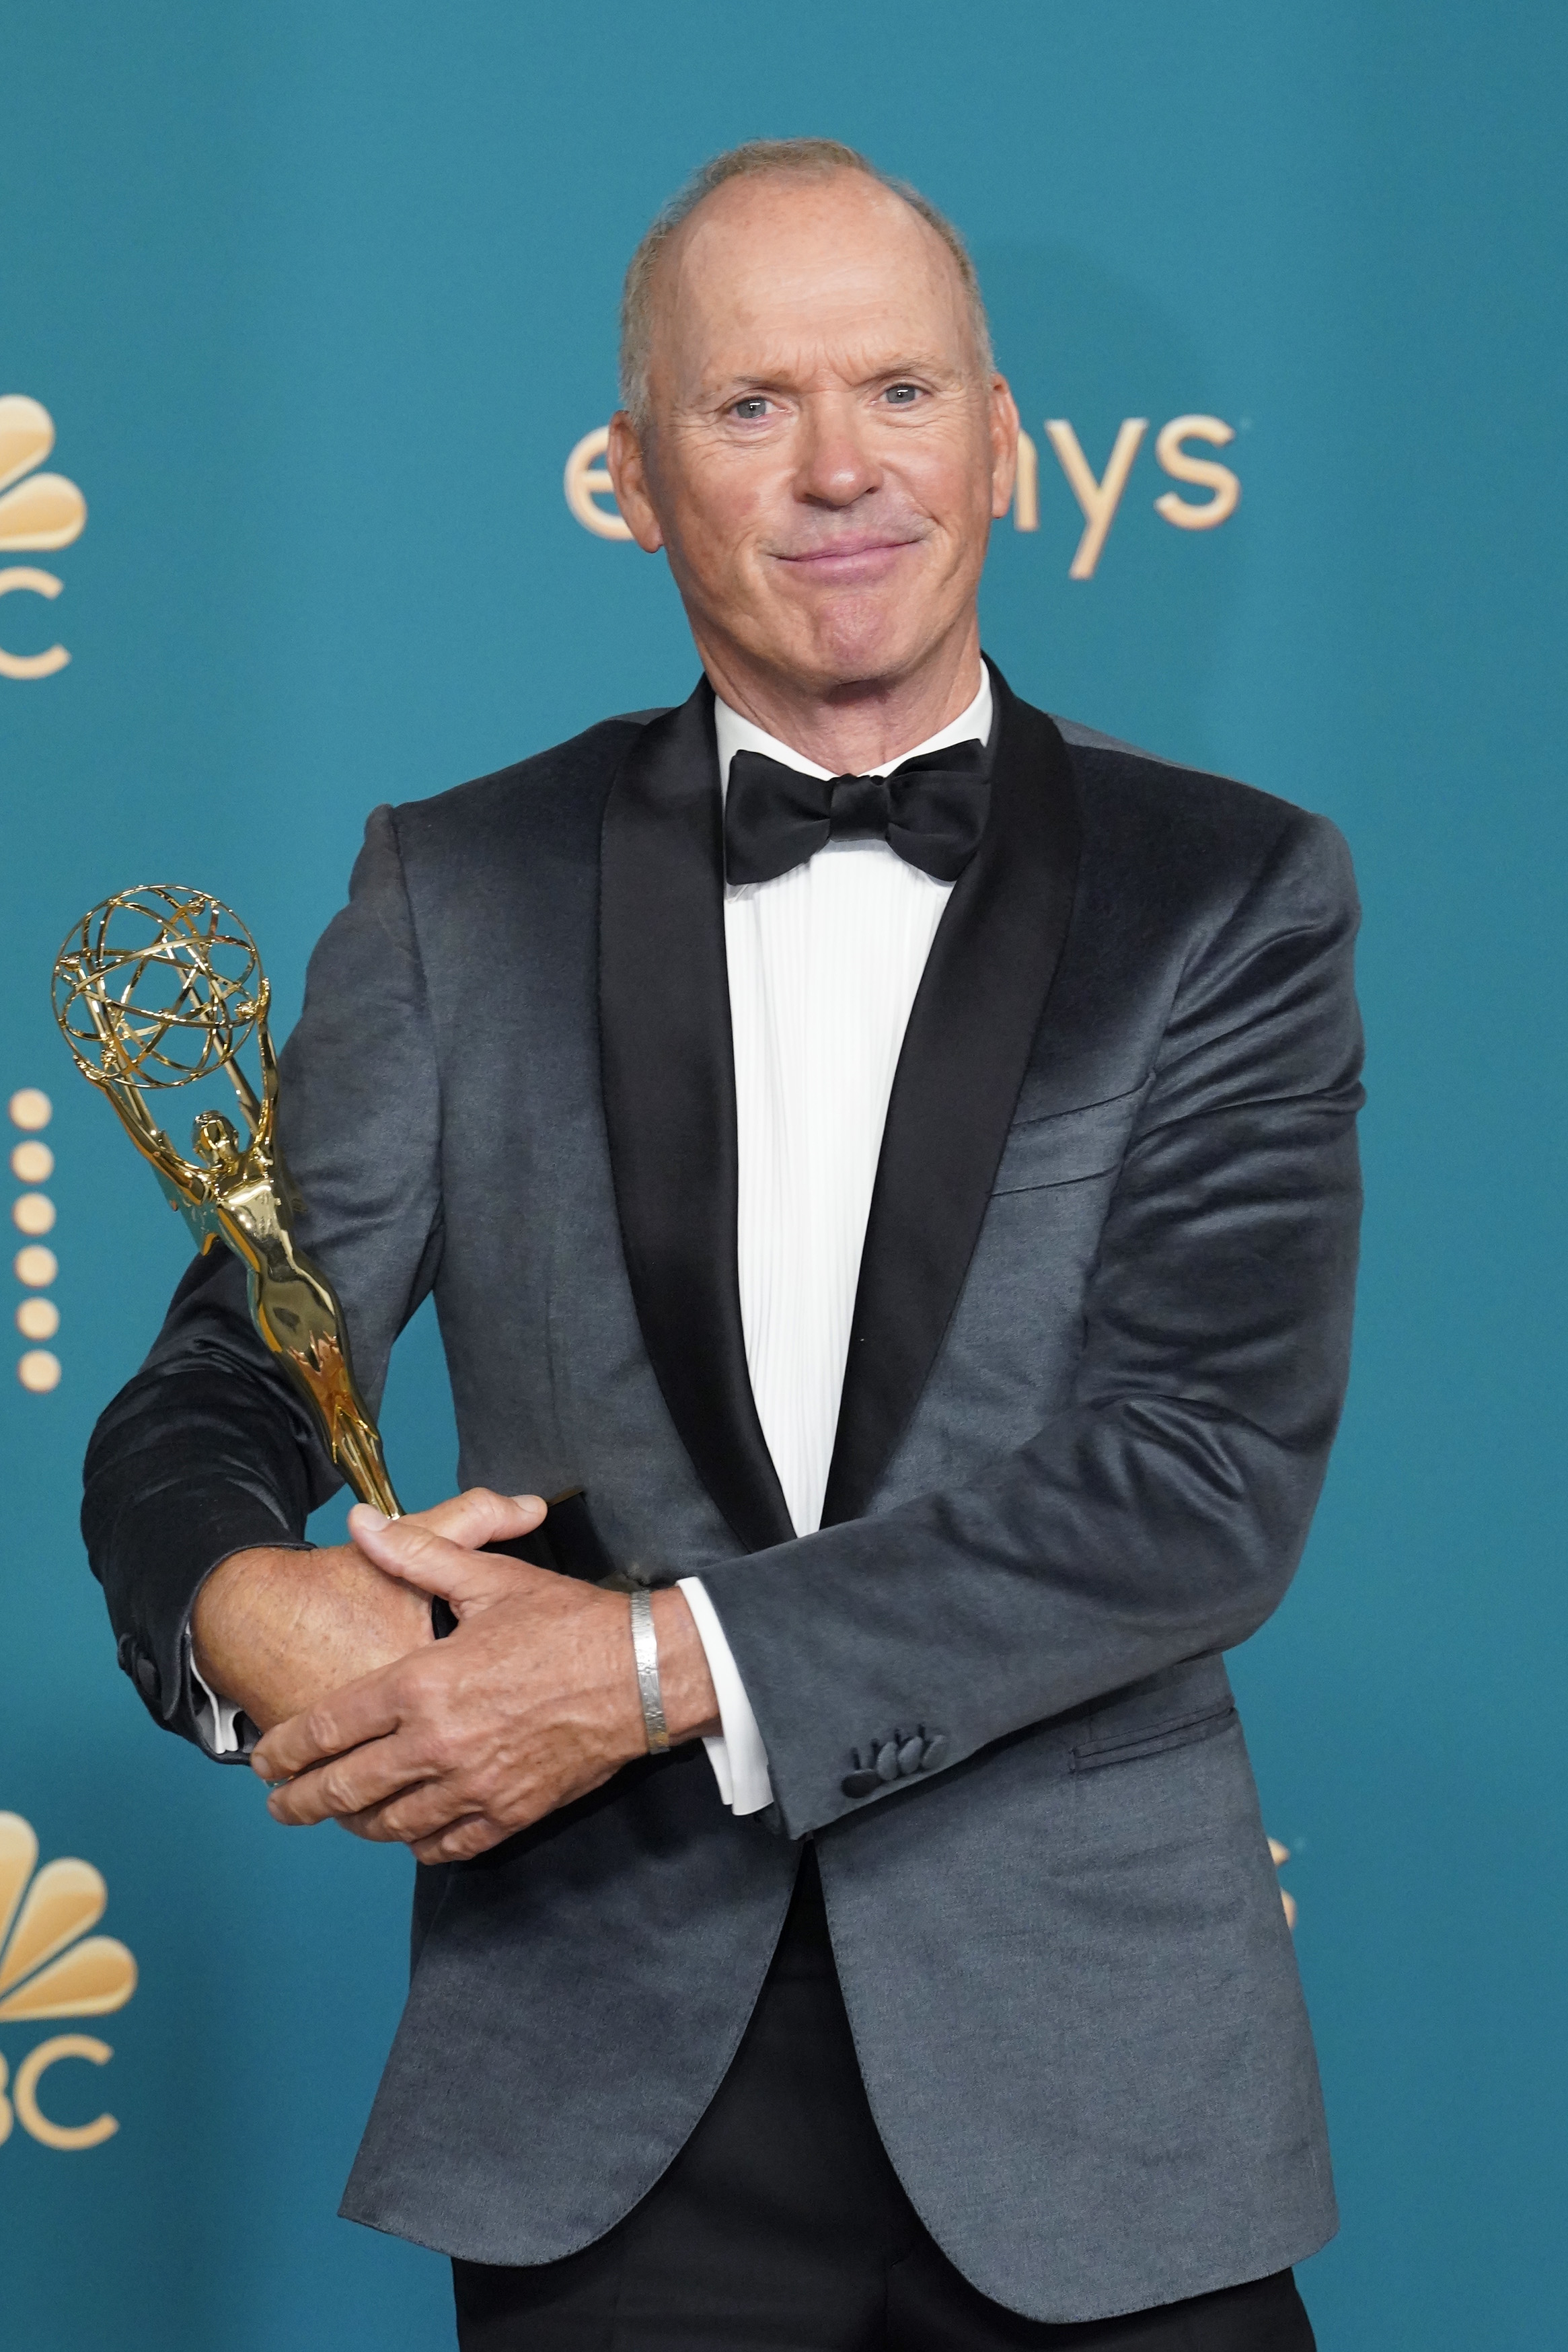 Michael Keaton holding an Emmy award